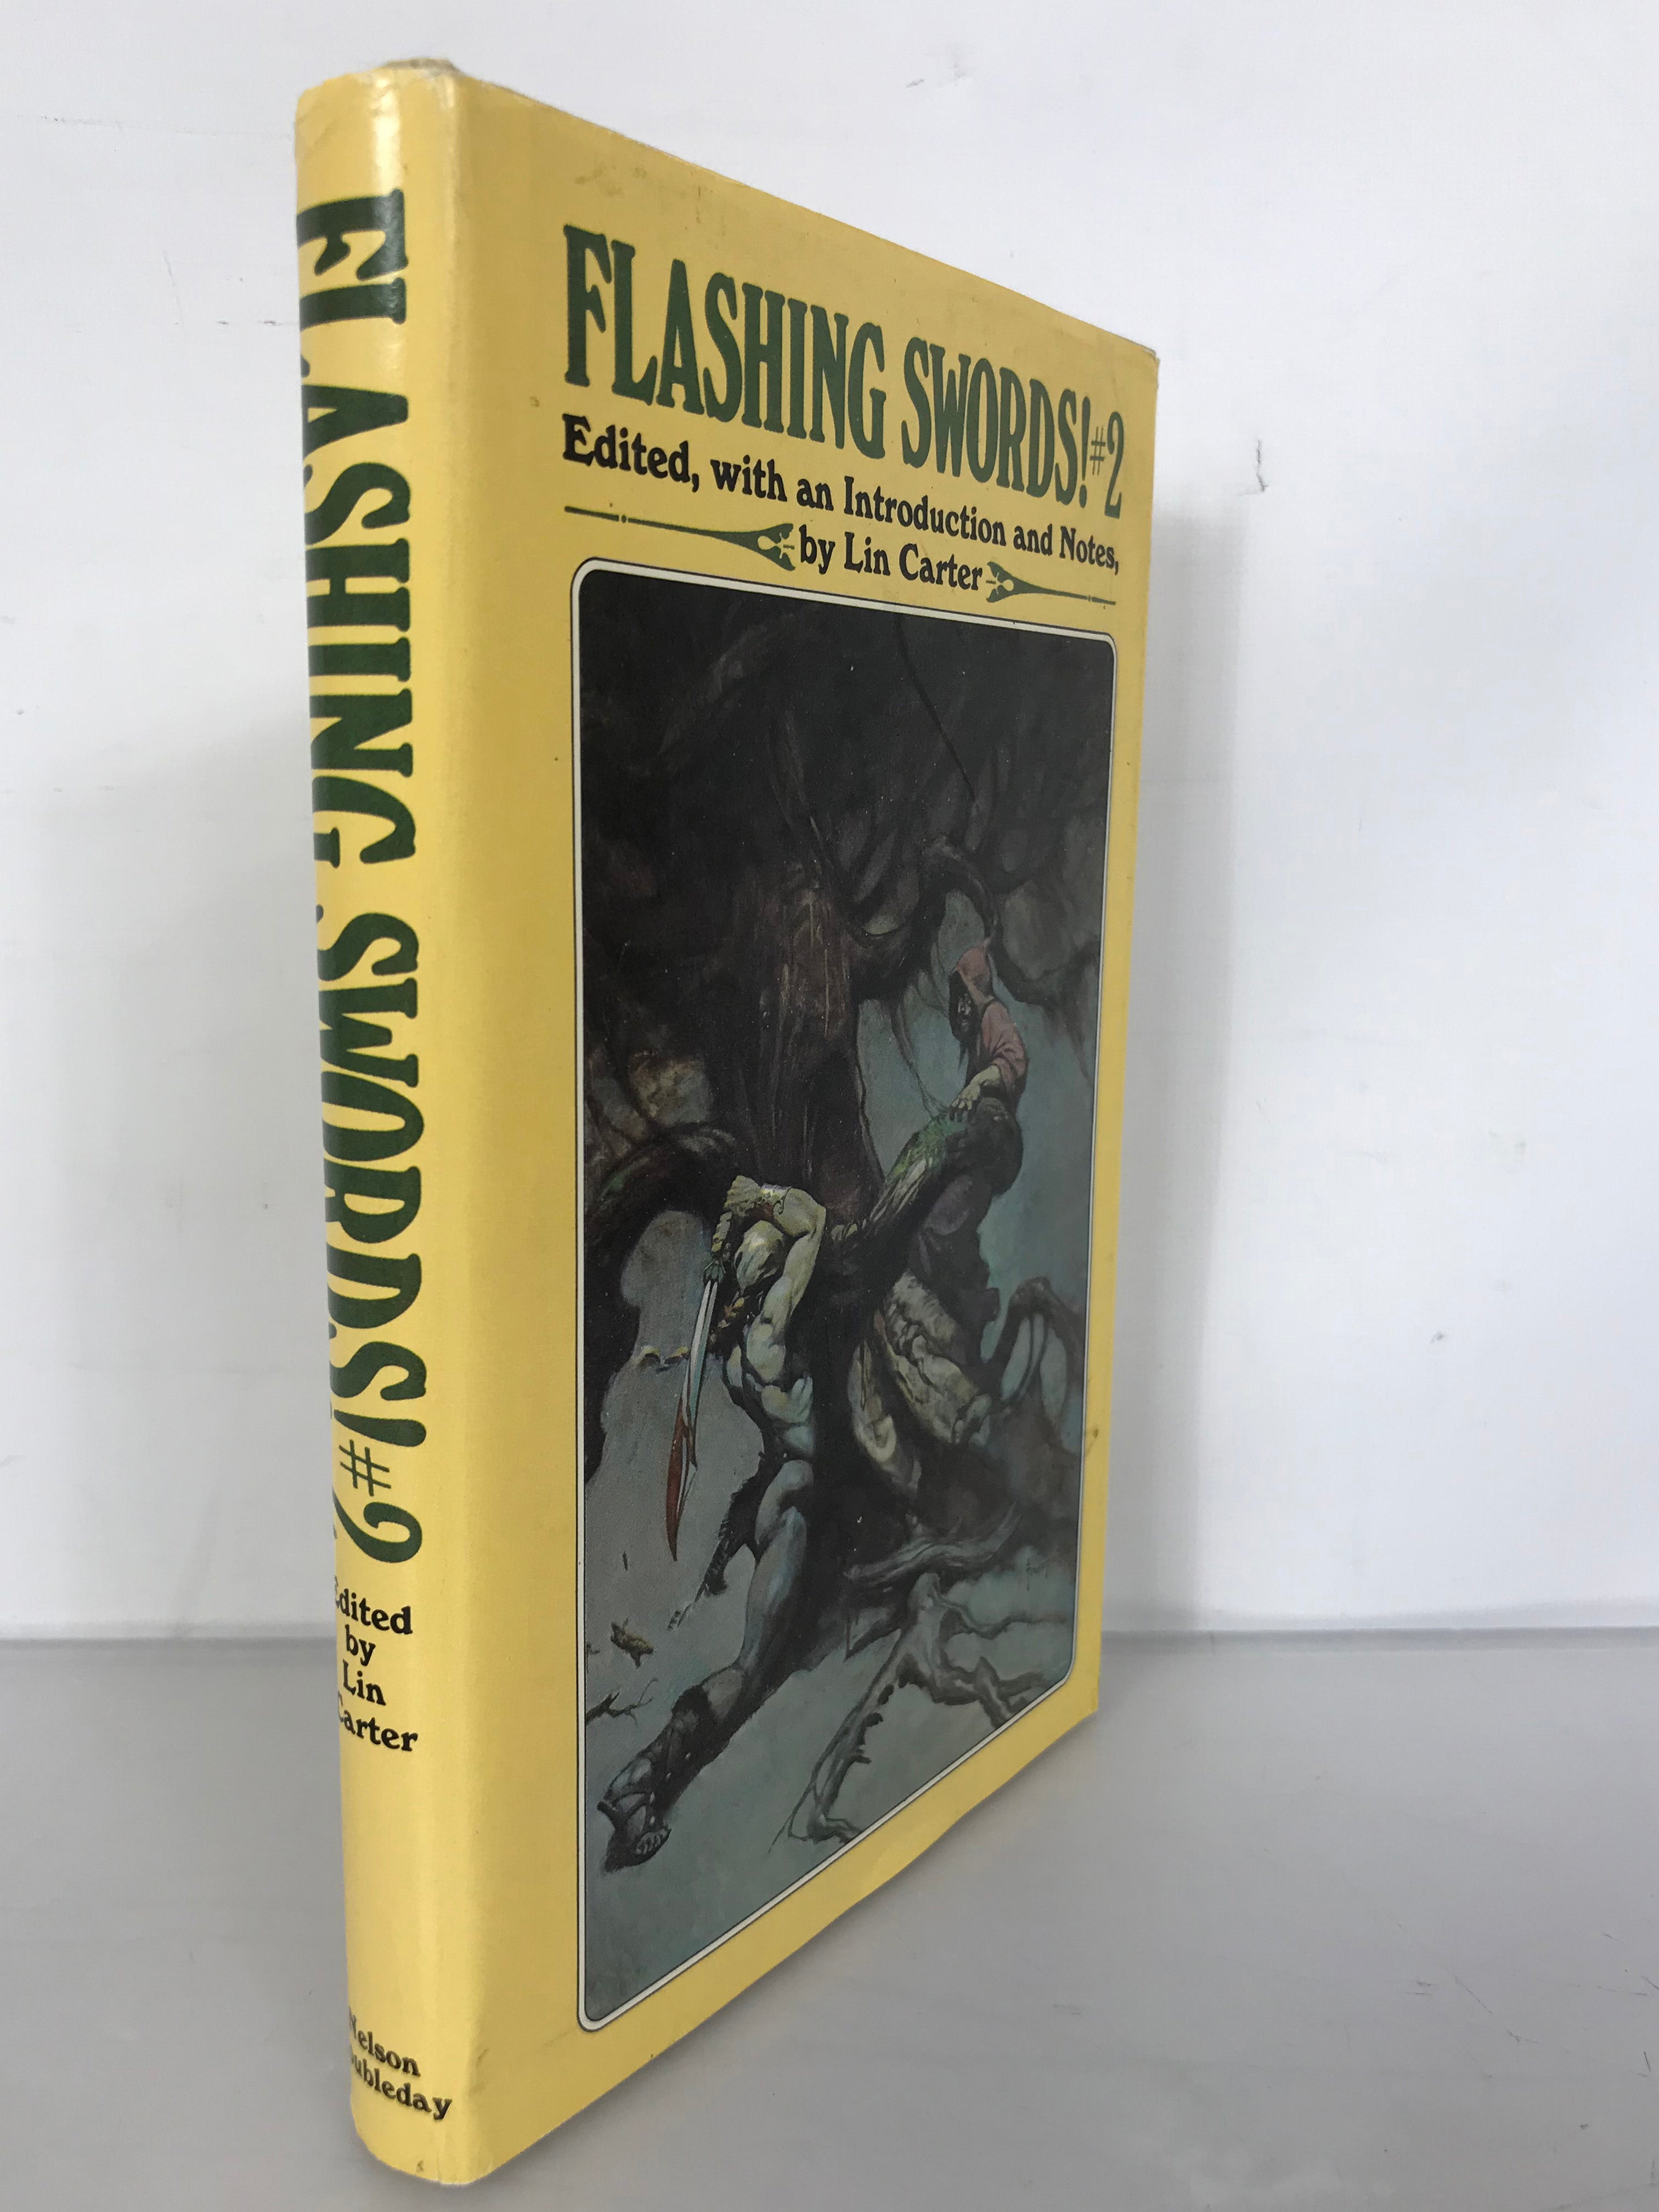 Flashing Swords #2 Edited by Lin Carter Book Club Edition 1973 HC DJ